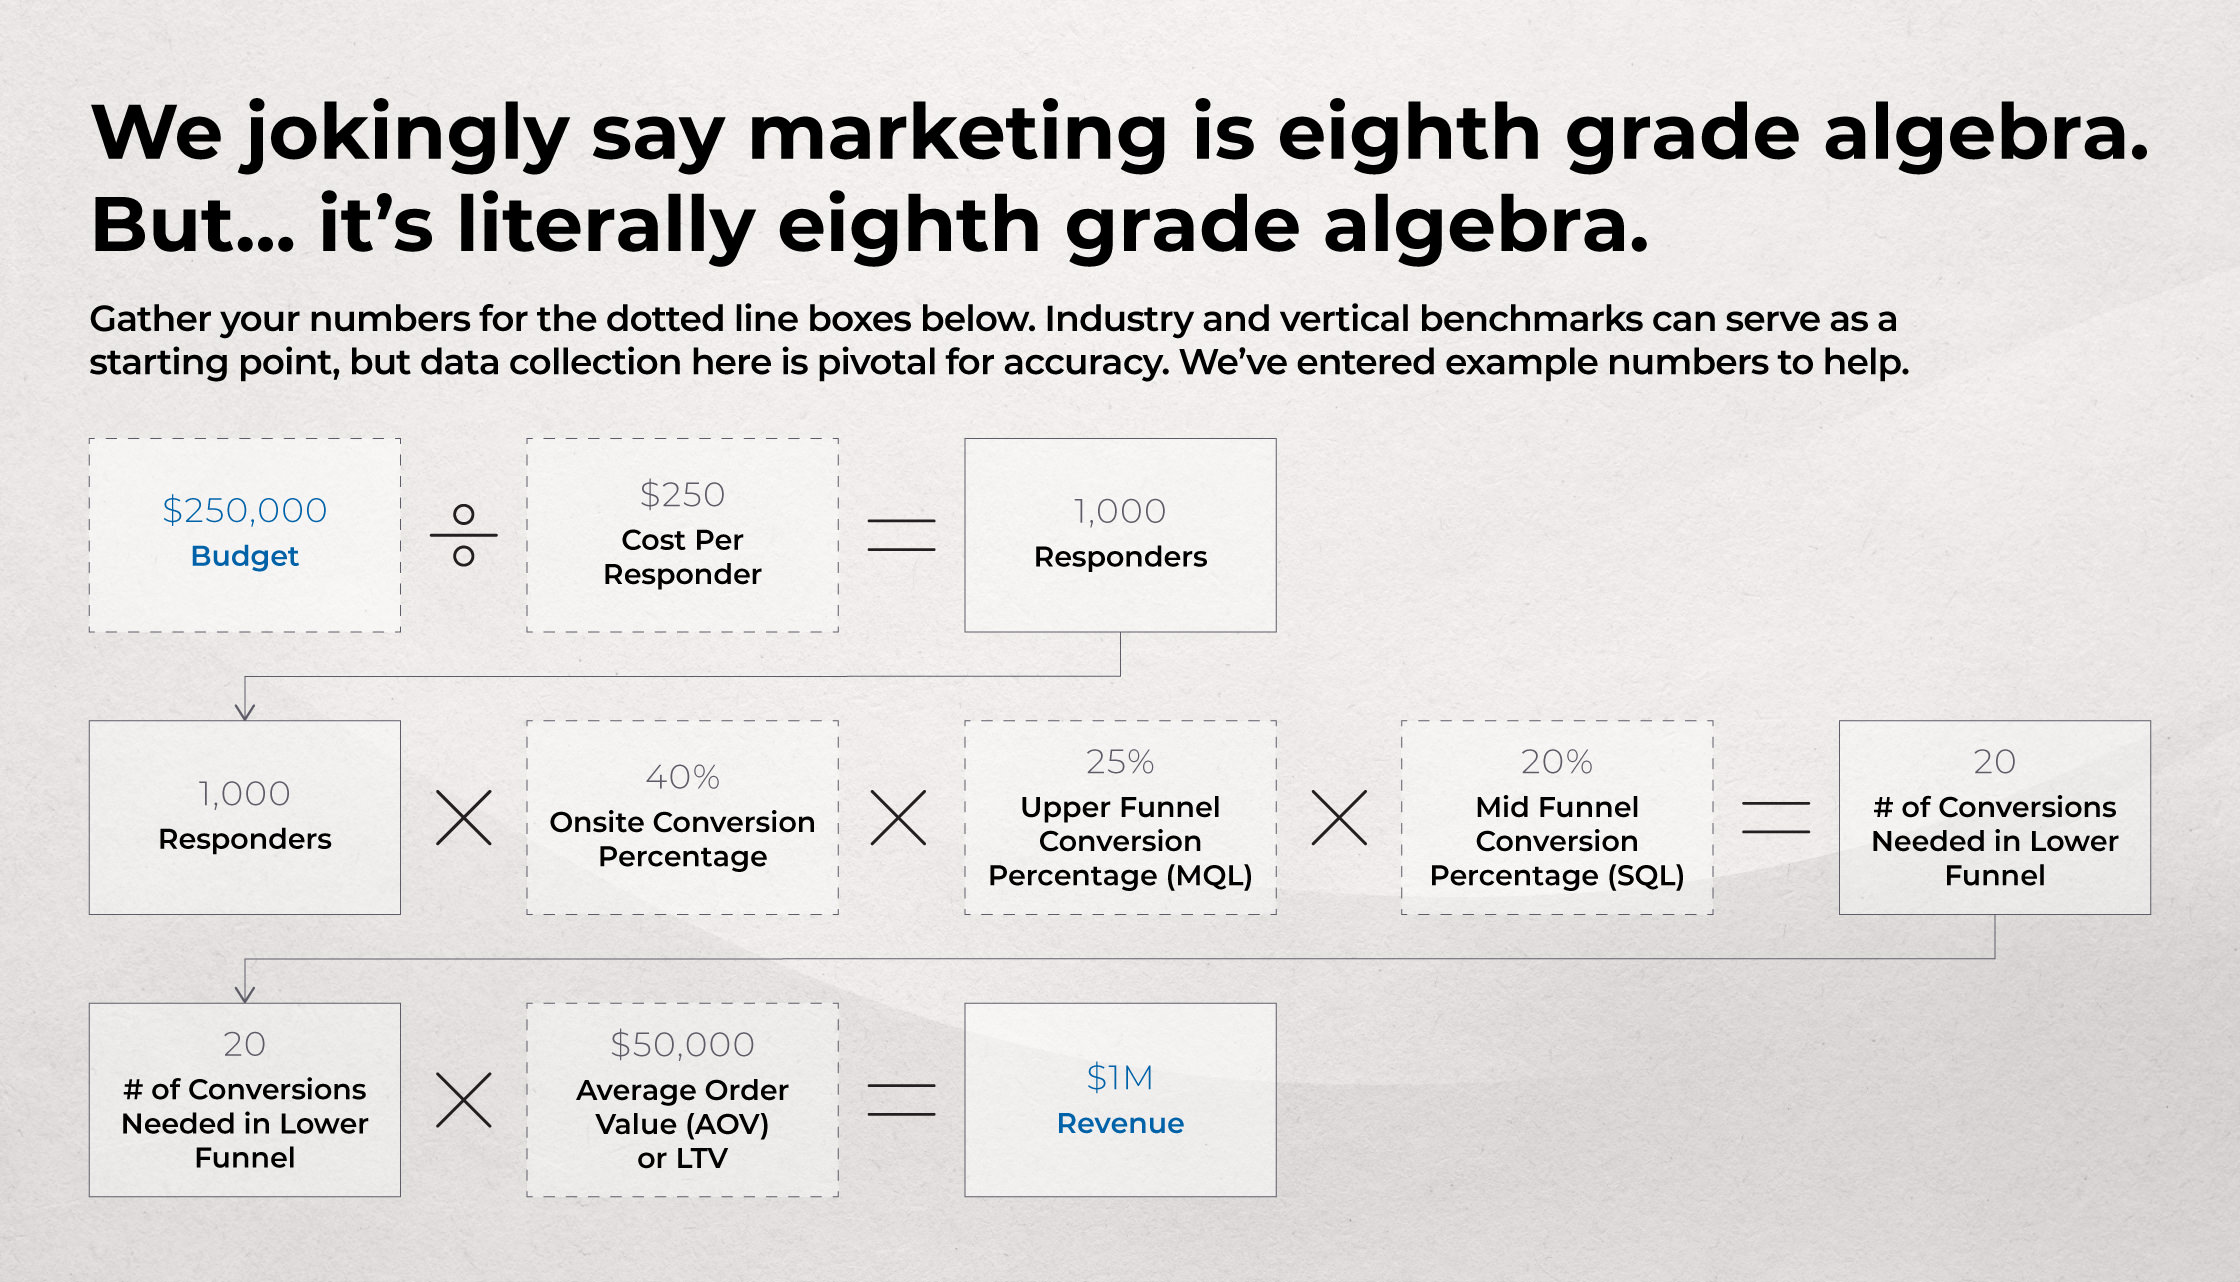 We jokingly say marketing is eighth grade algebra. But... it's literally eighth grade algebra.